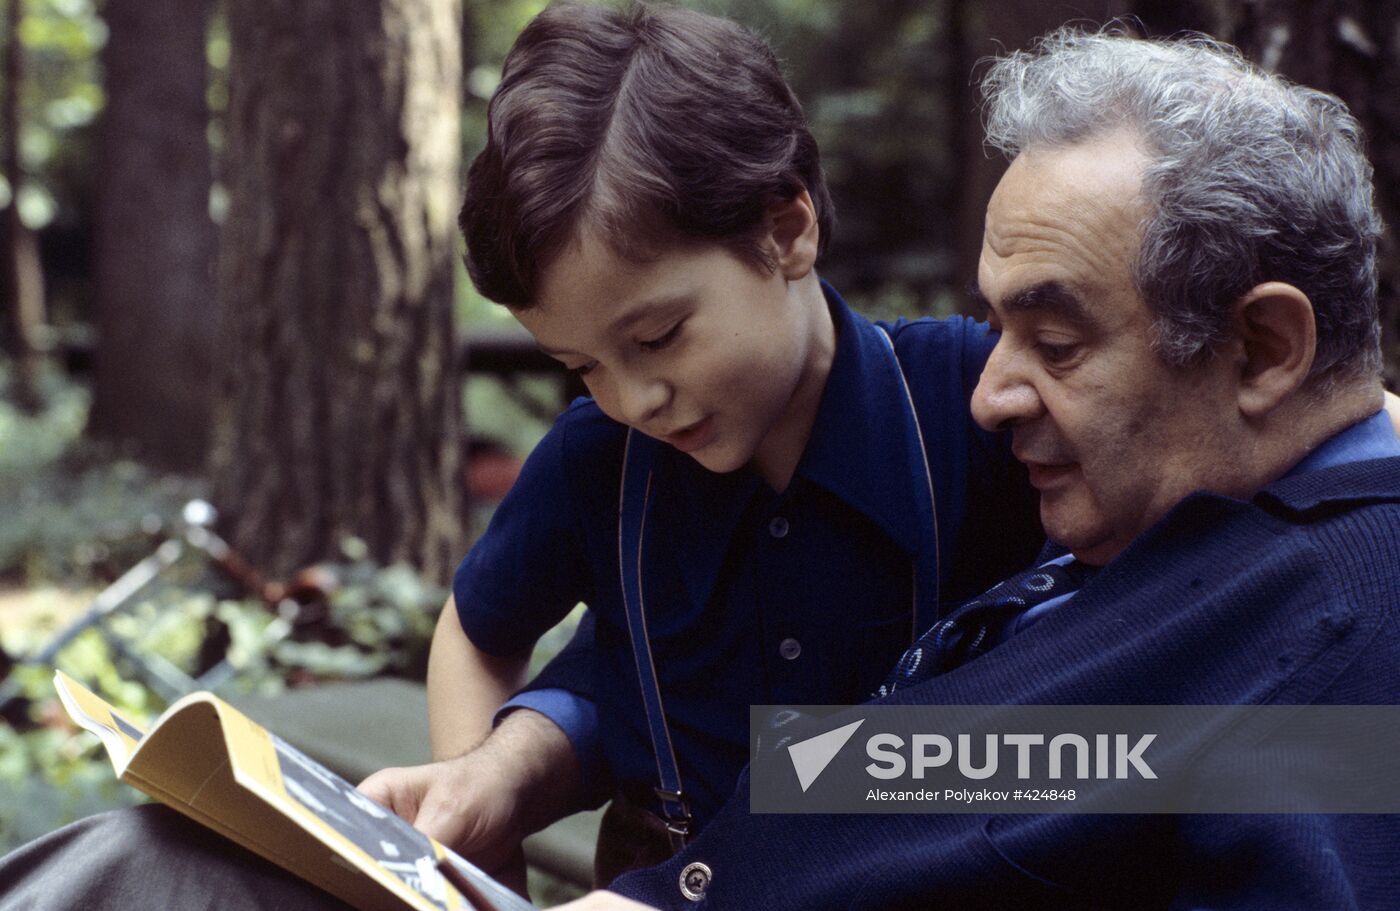 Eduard Kolmanovsky with his grandson